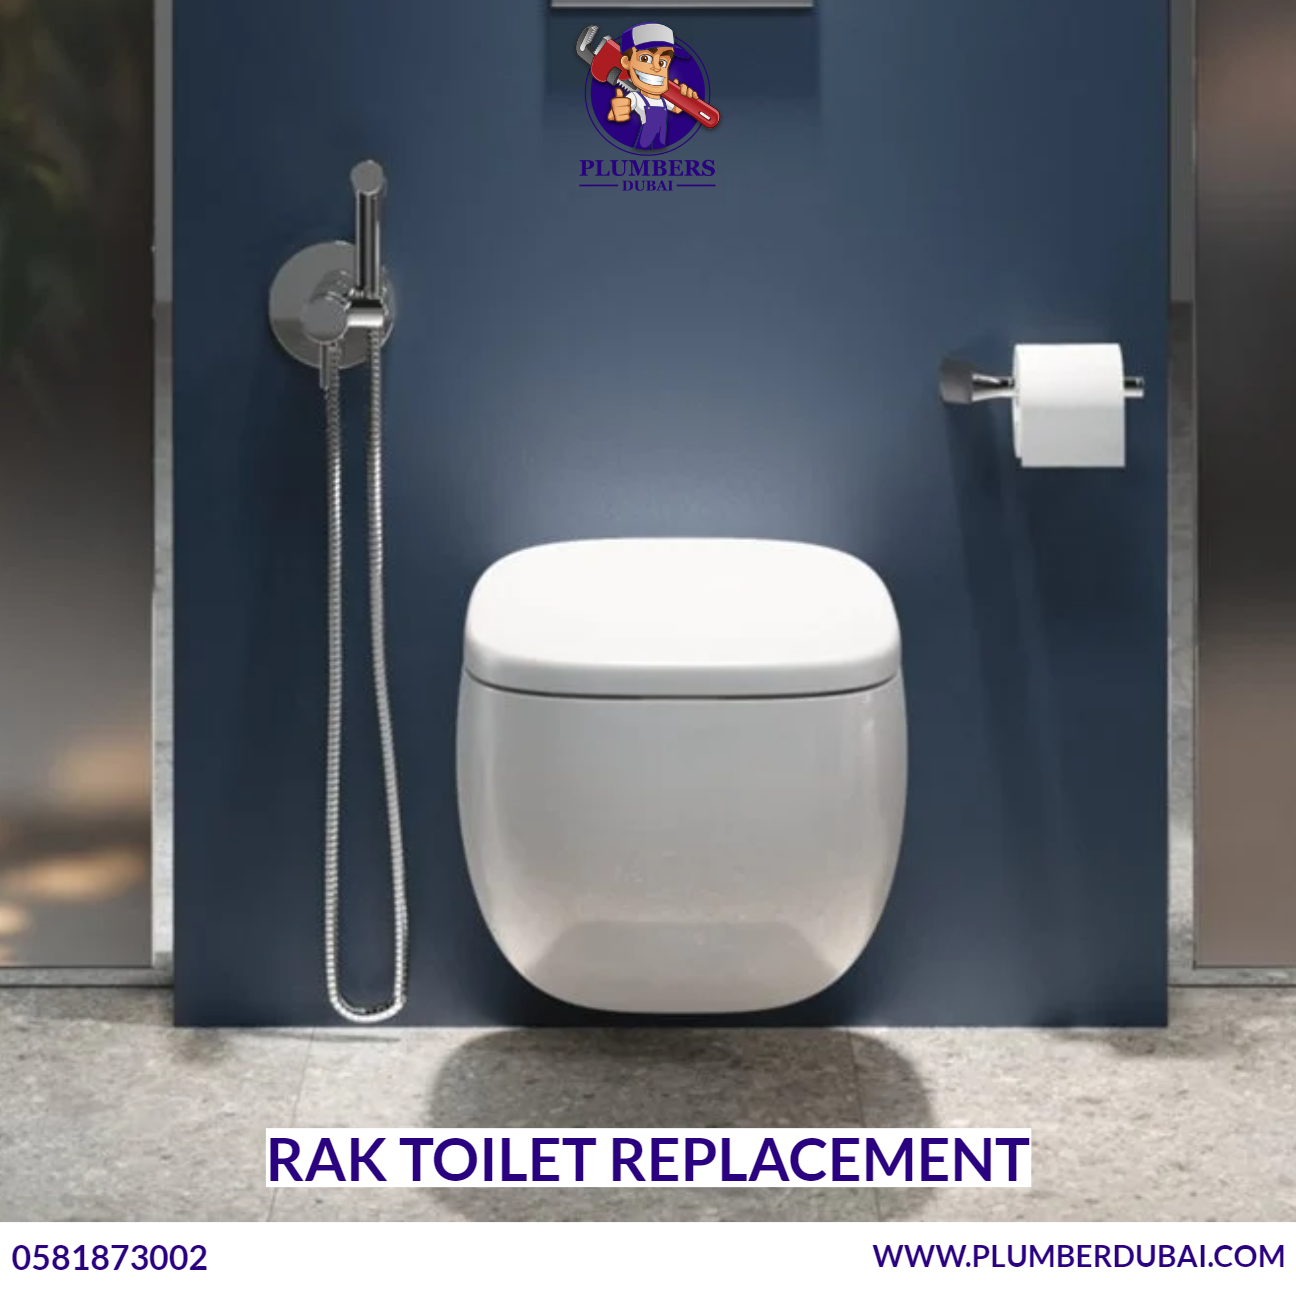 RAK toilet replacement